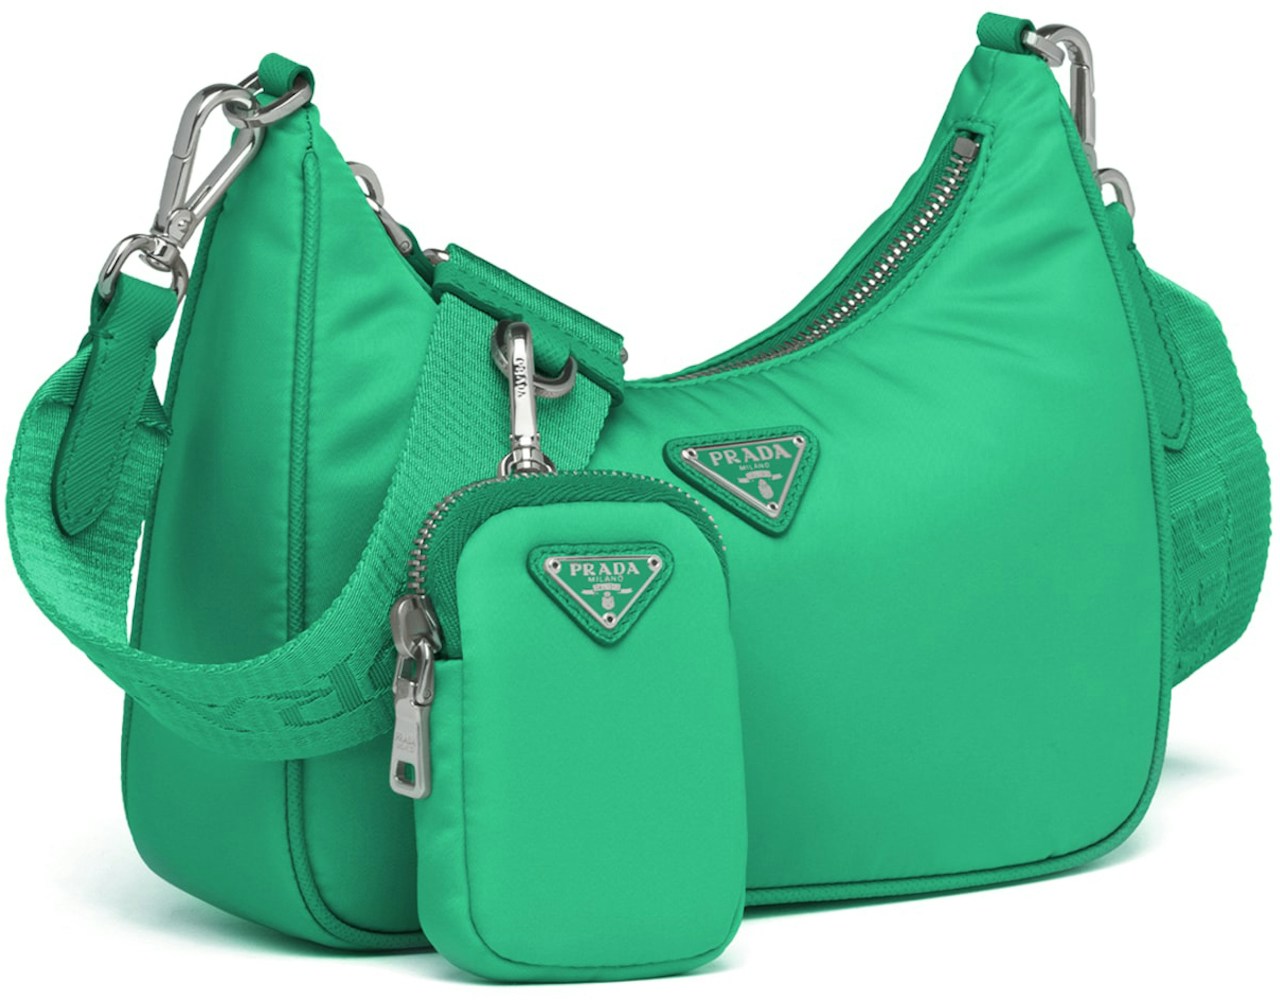 Prada Re-Edition 2005 Shoulder Bag Nylon Mint Green in Nylon with